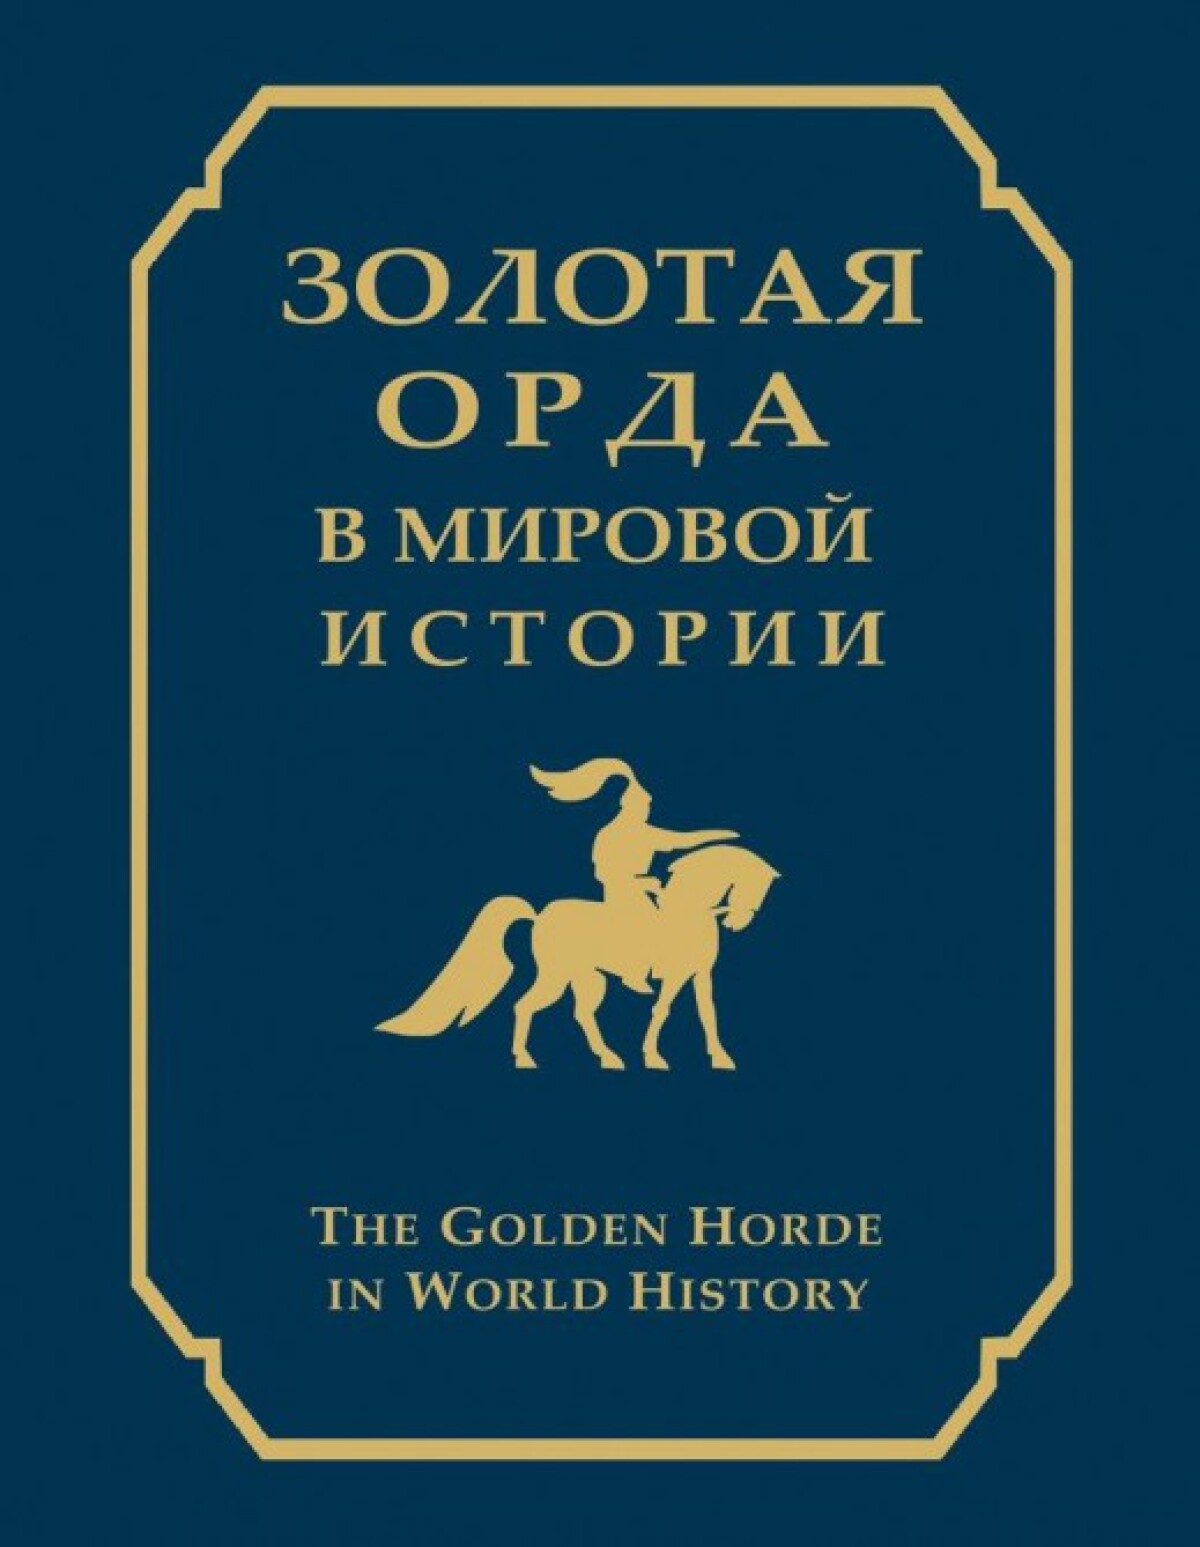 Golden Horde and World History - e-history.kz